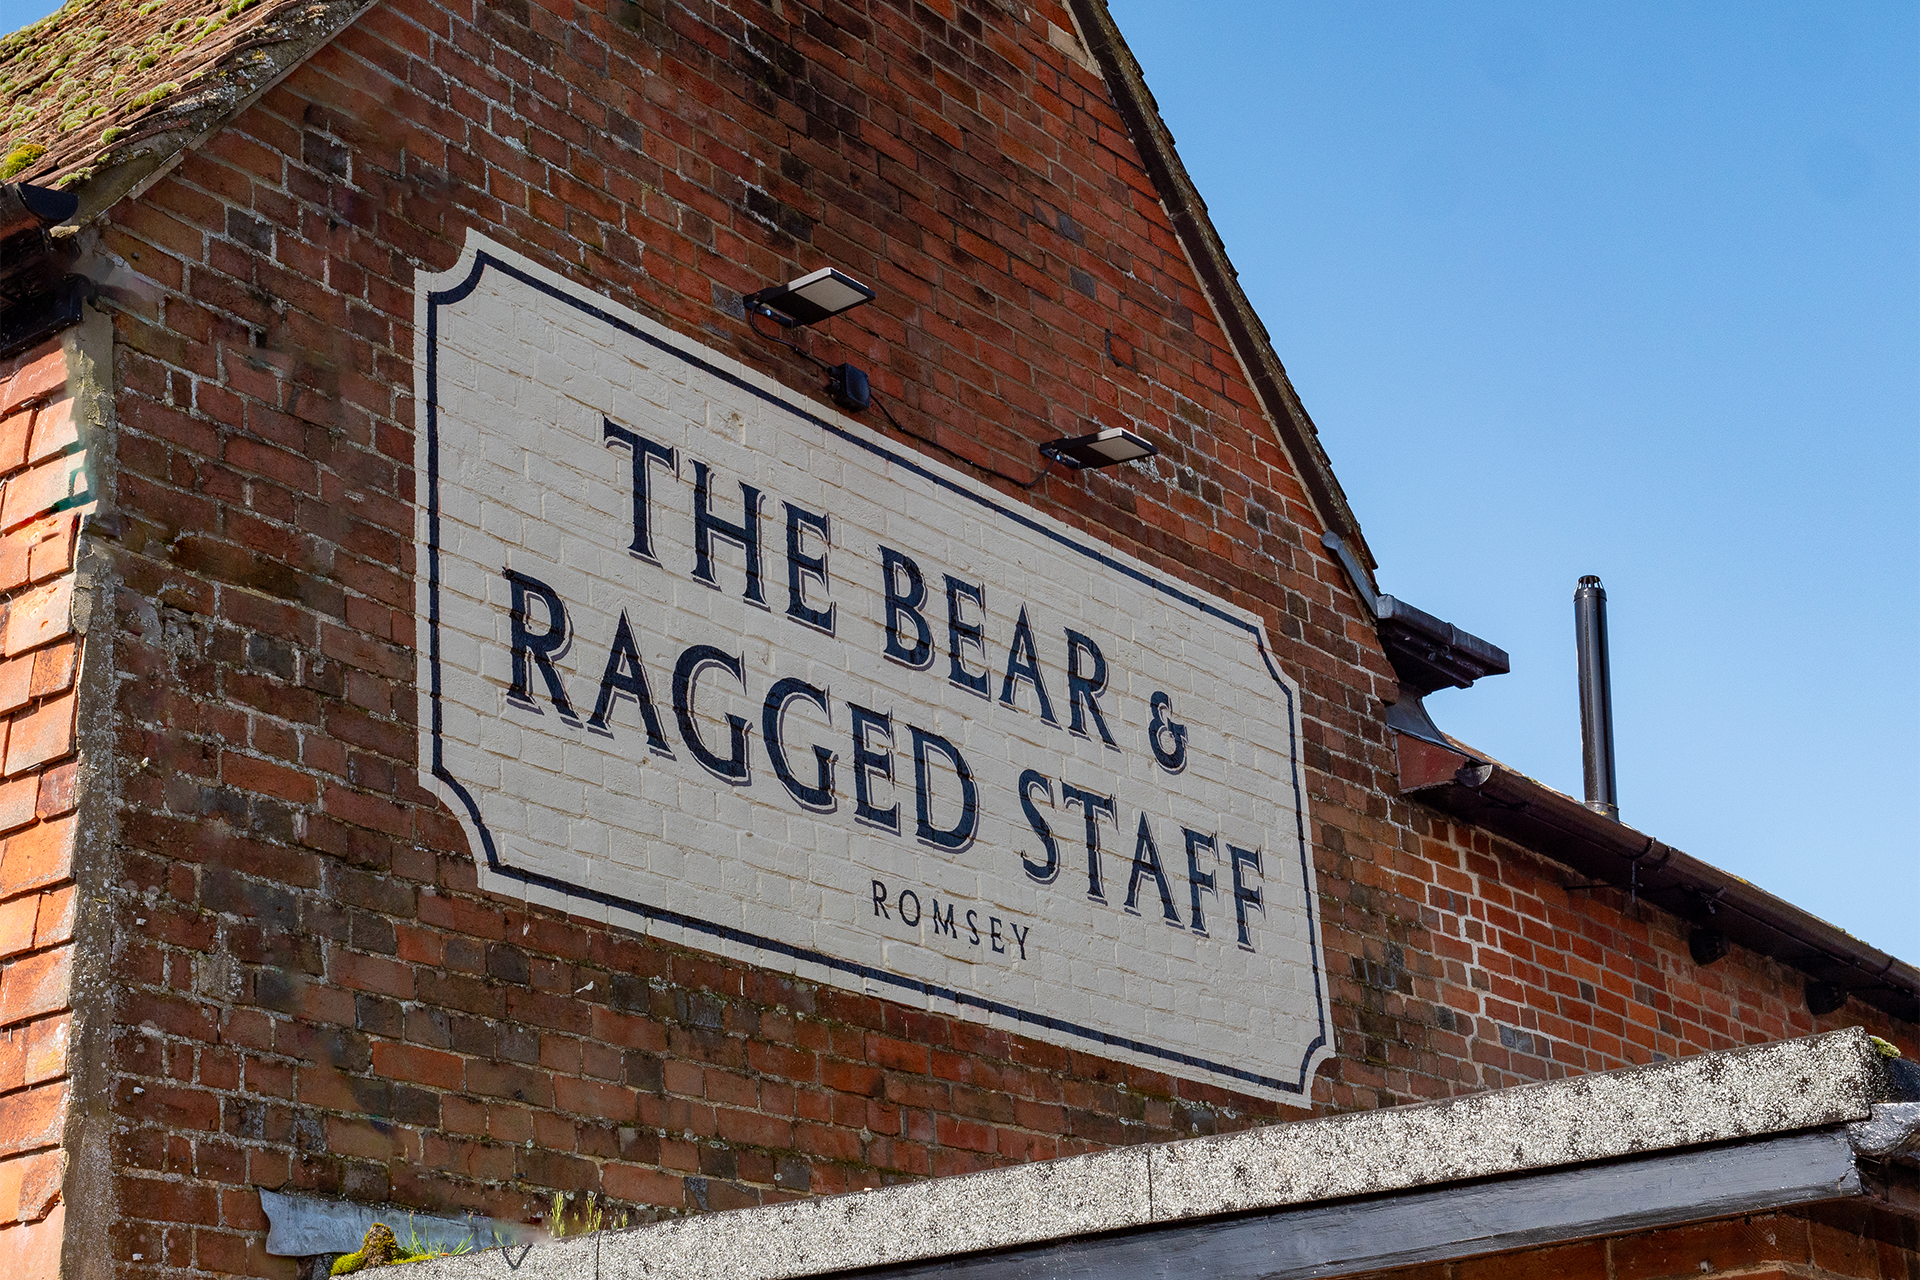 Bear & Ragged Staff Romsey